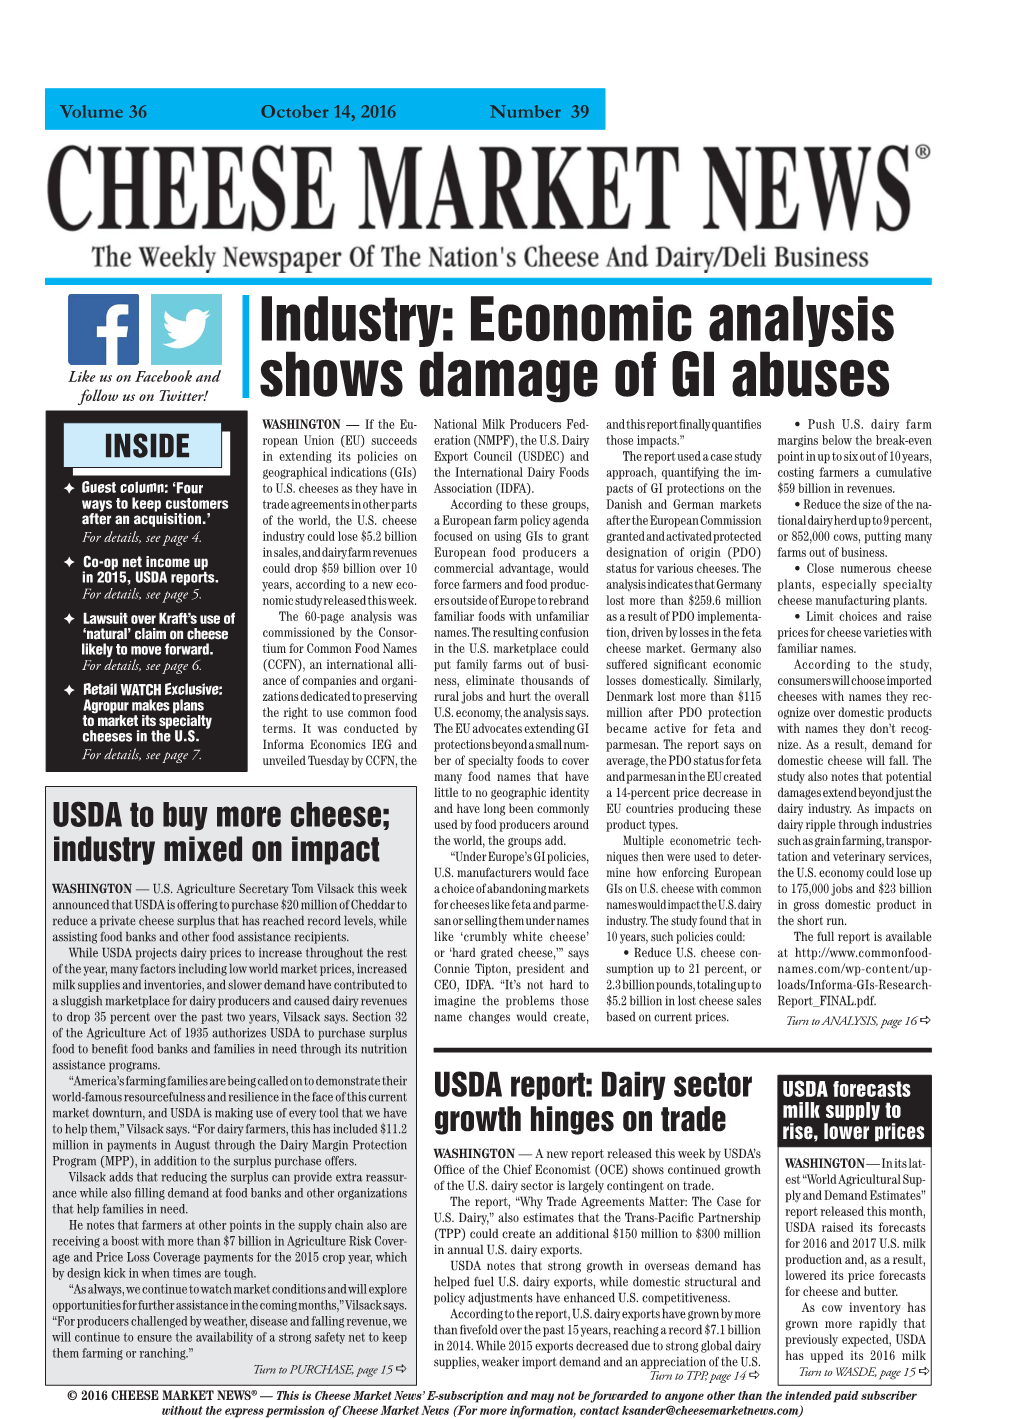 Industry: Economic Analysis Shows Damage of GI Abuses